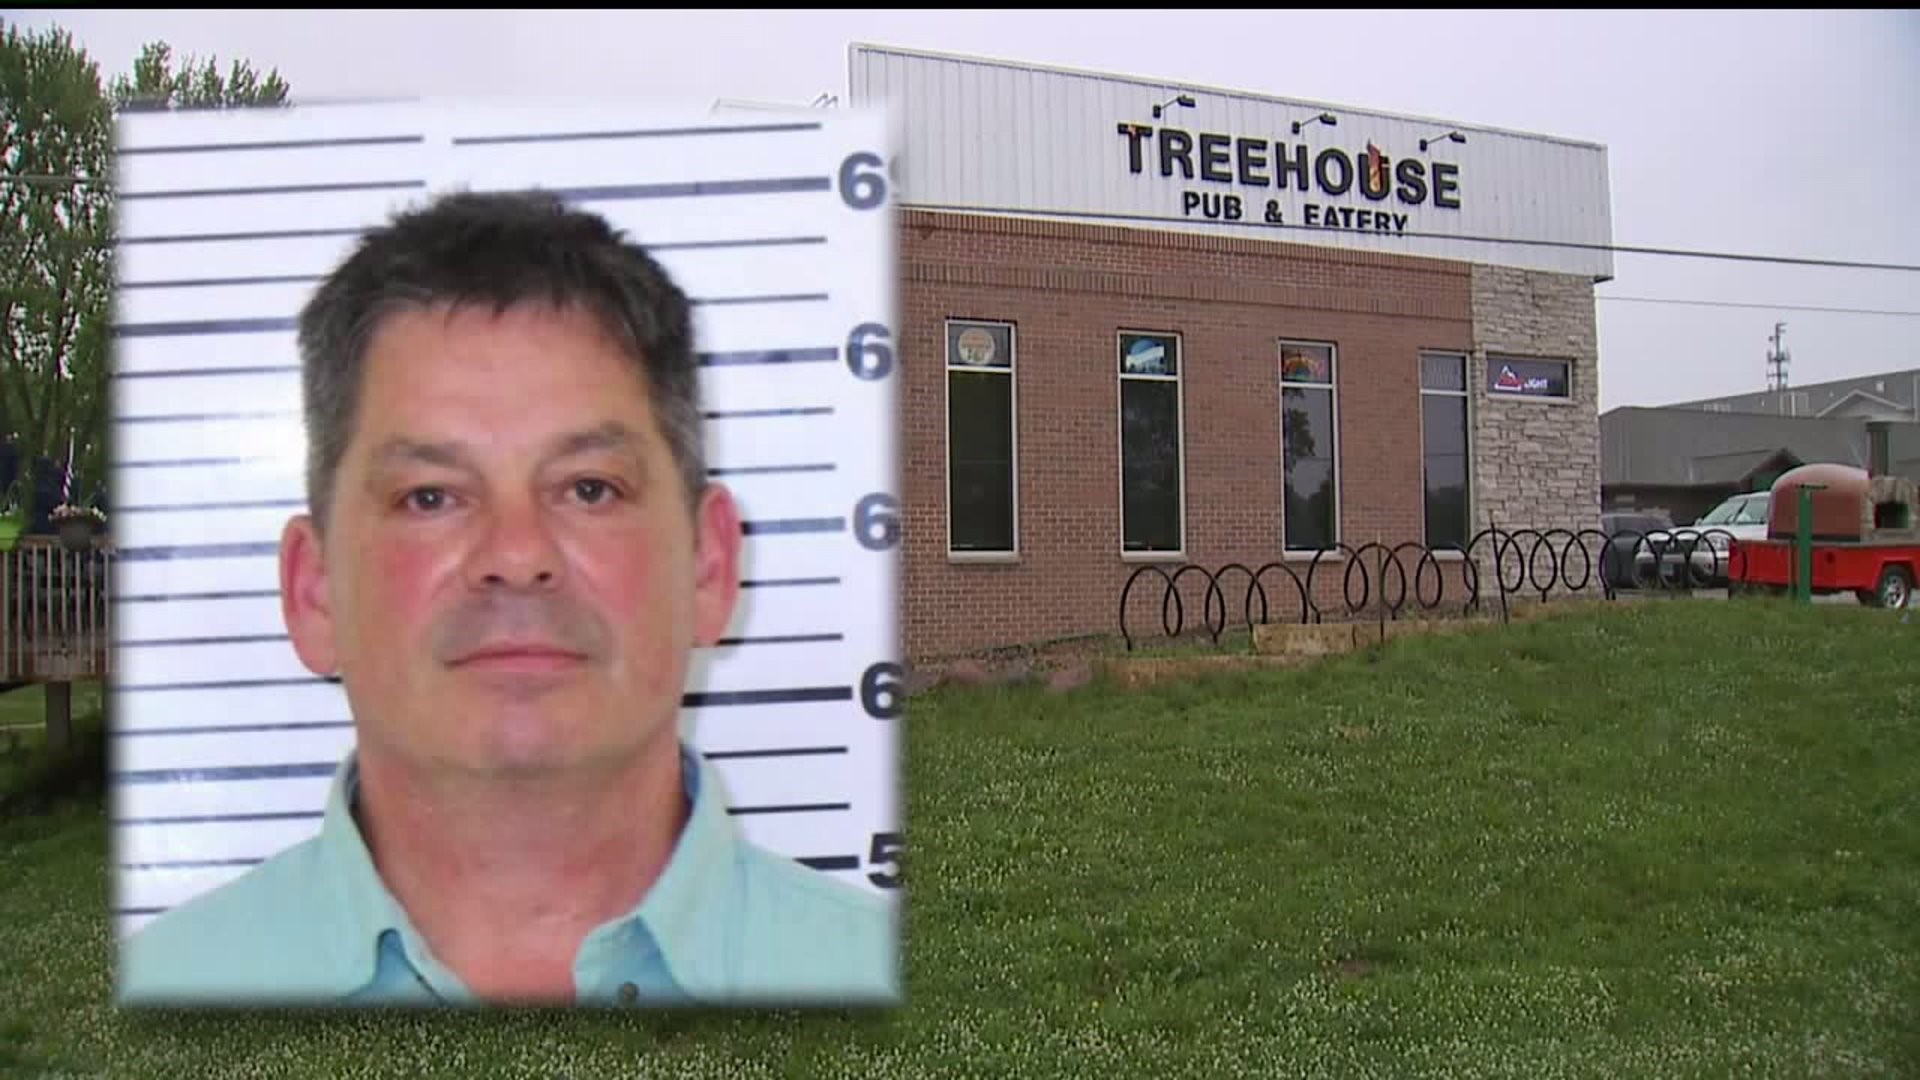 Bettendorf: Treehouse Pub owners latest arrest raises questions of preferential treatment